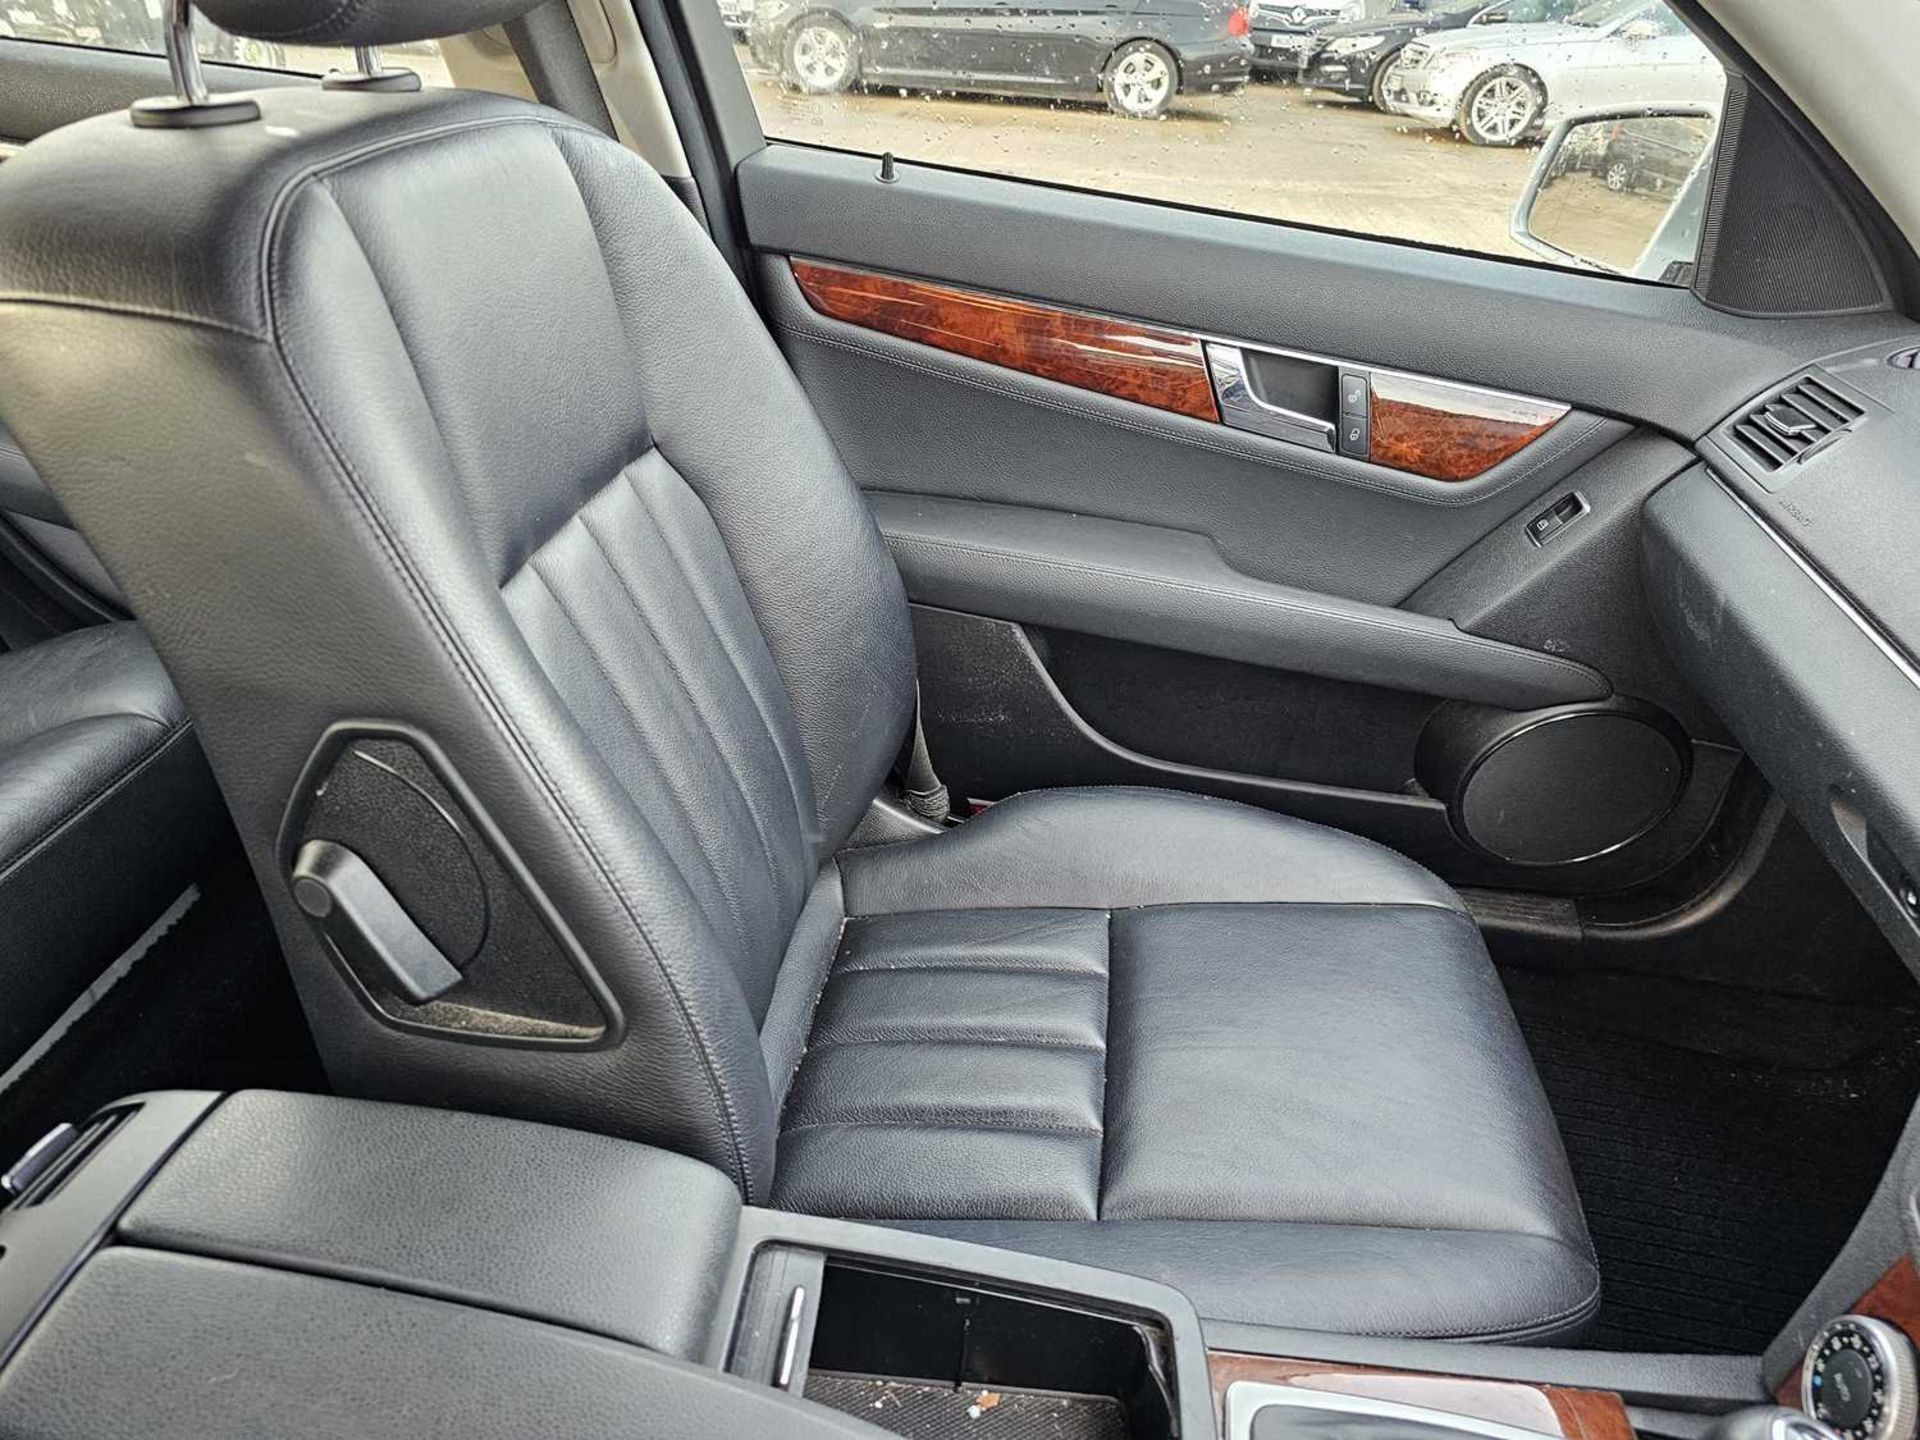 2011 Mercedes C250 Avantgarde CDi, Auto, Parking Sensors, Full Leather, Heated Electric Seats, Bluet - Image 24 of 28